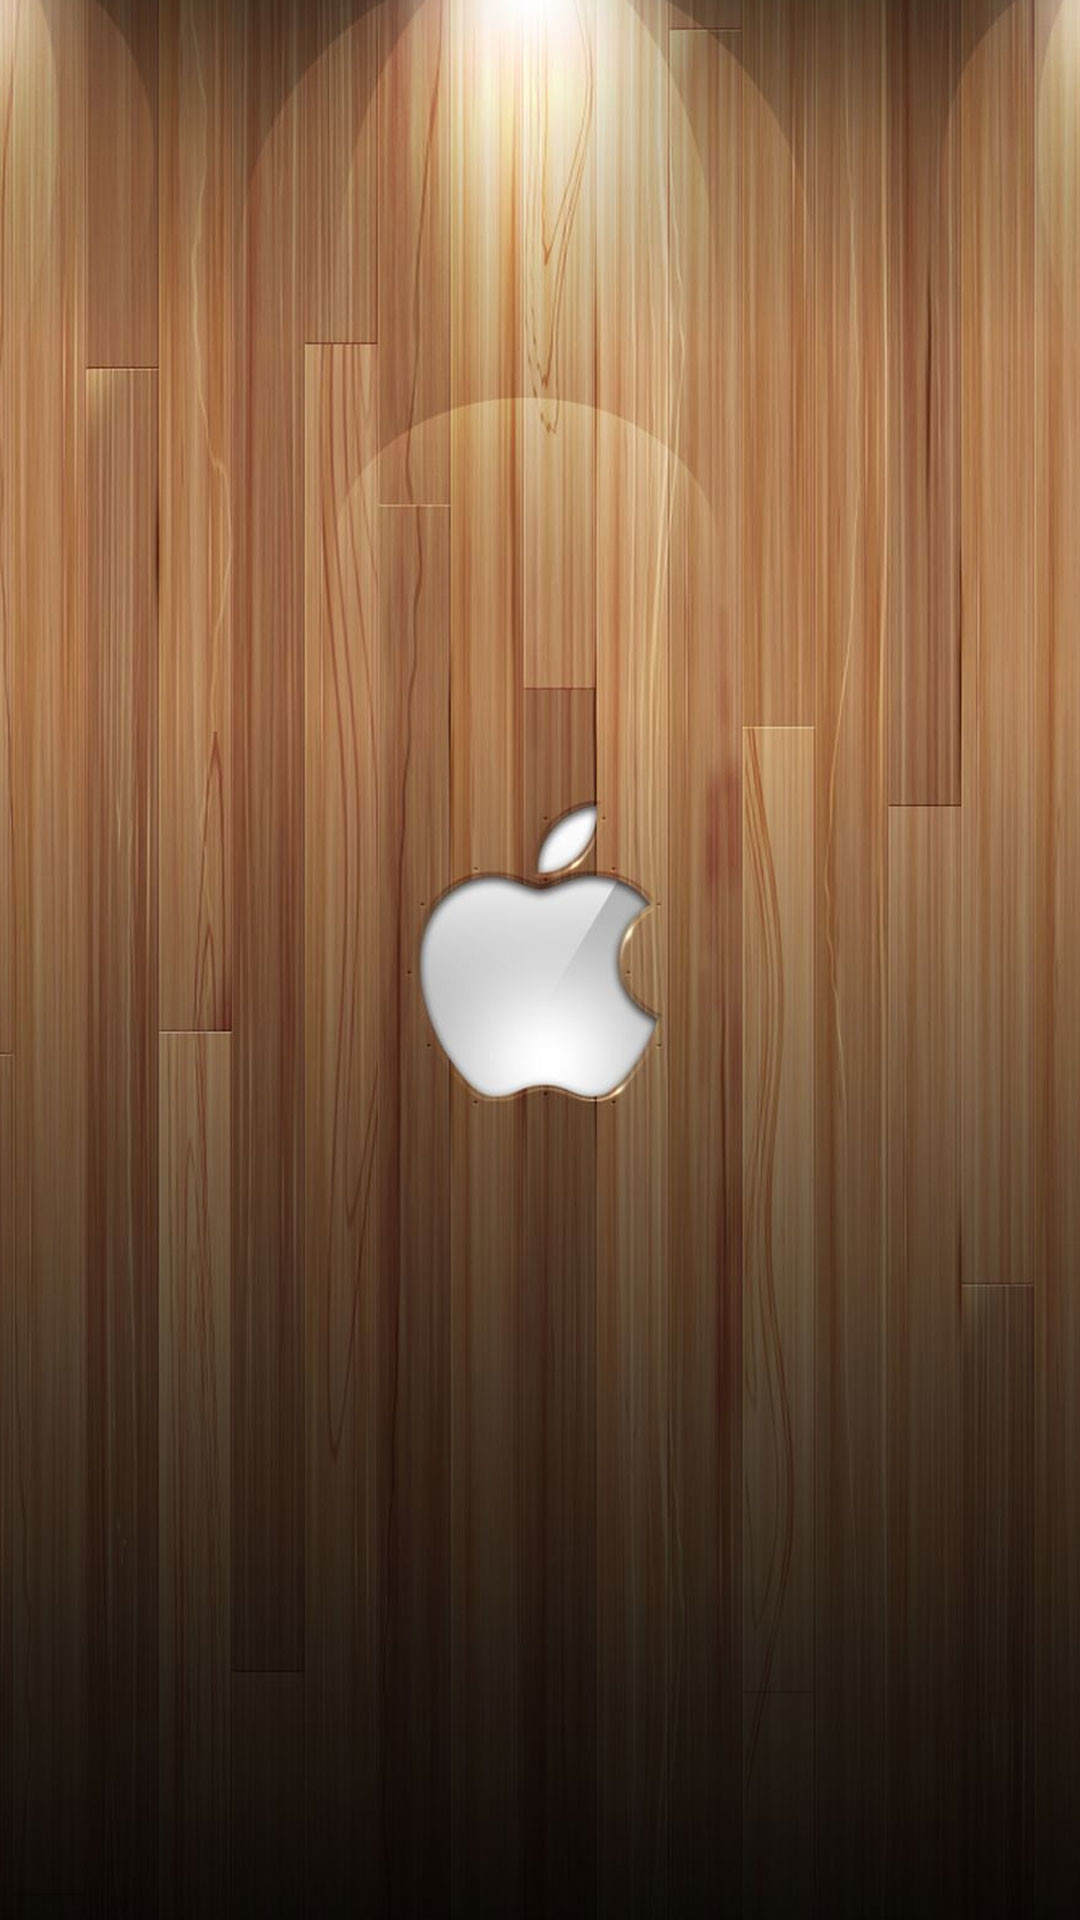 1080x1920 Beautiful Apple iPhone 6 Plus Wallpaper Retina Ready